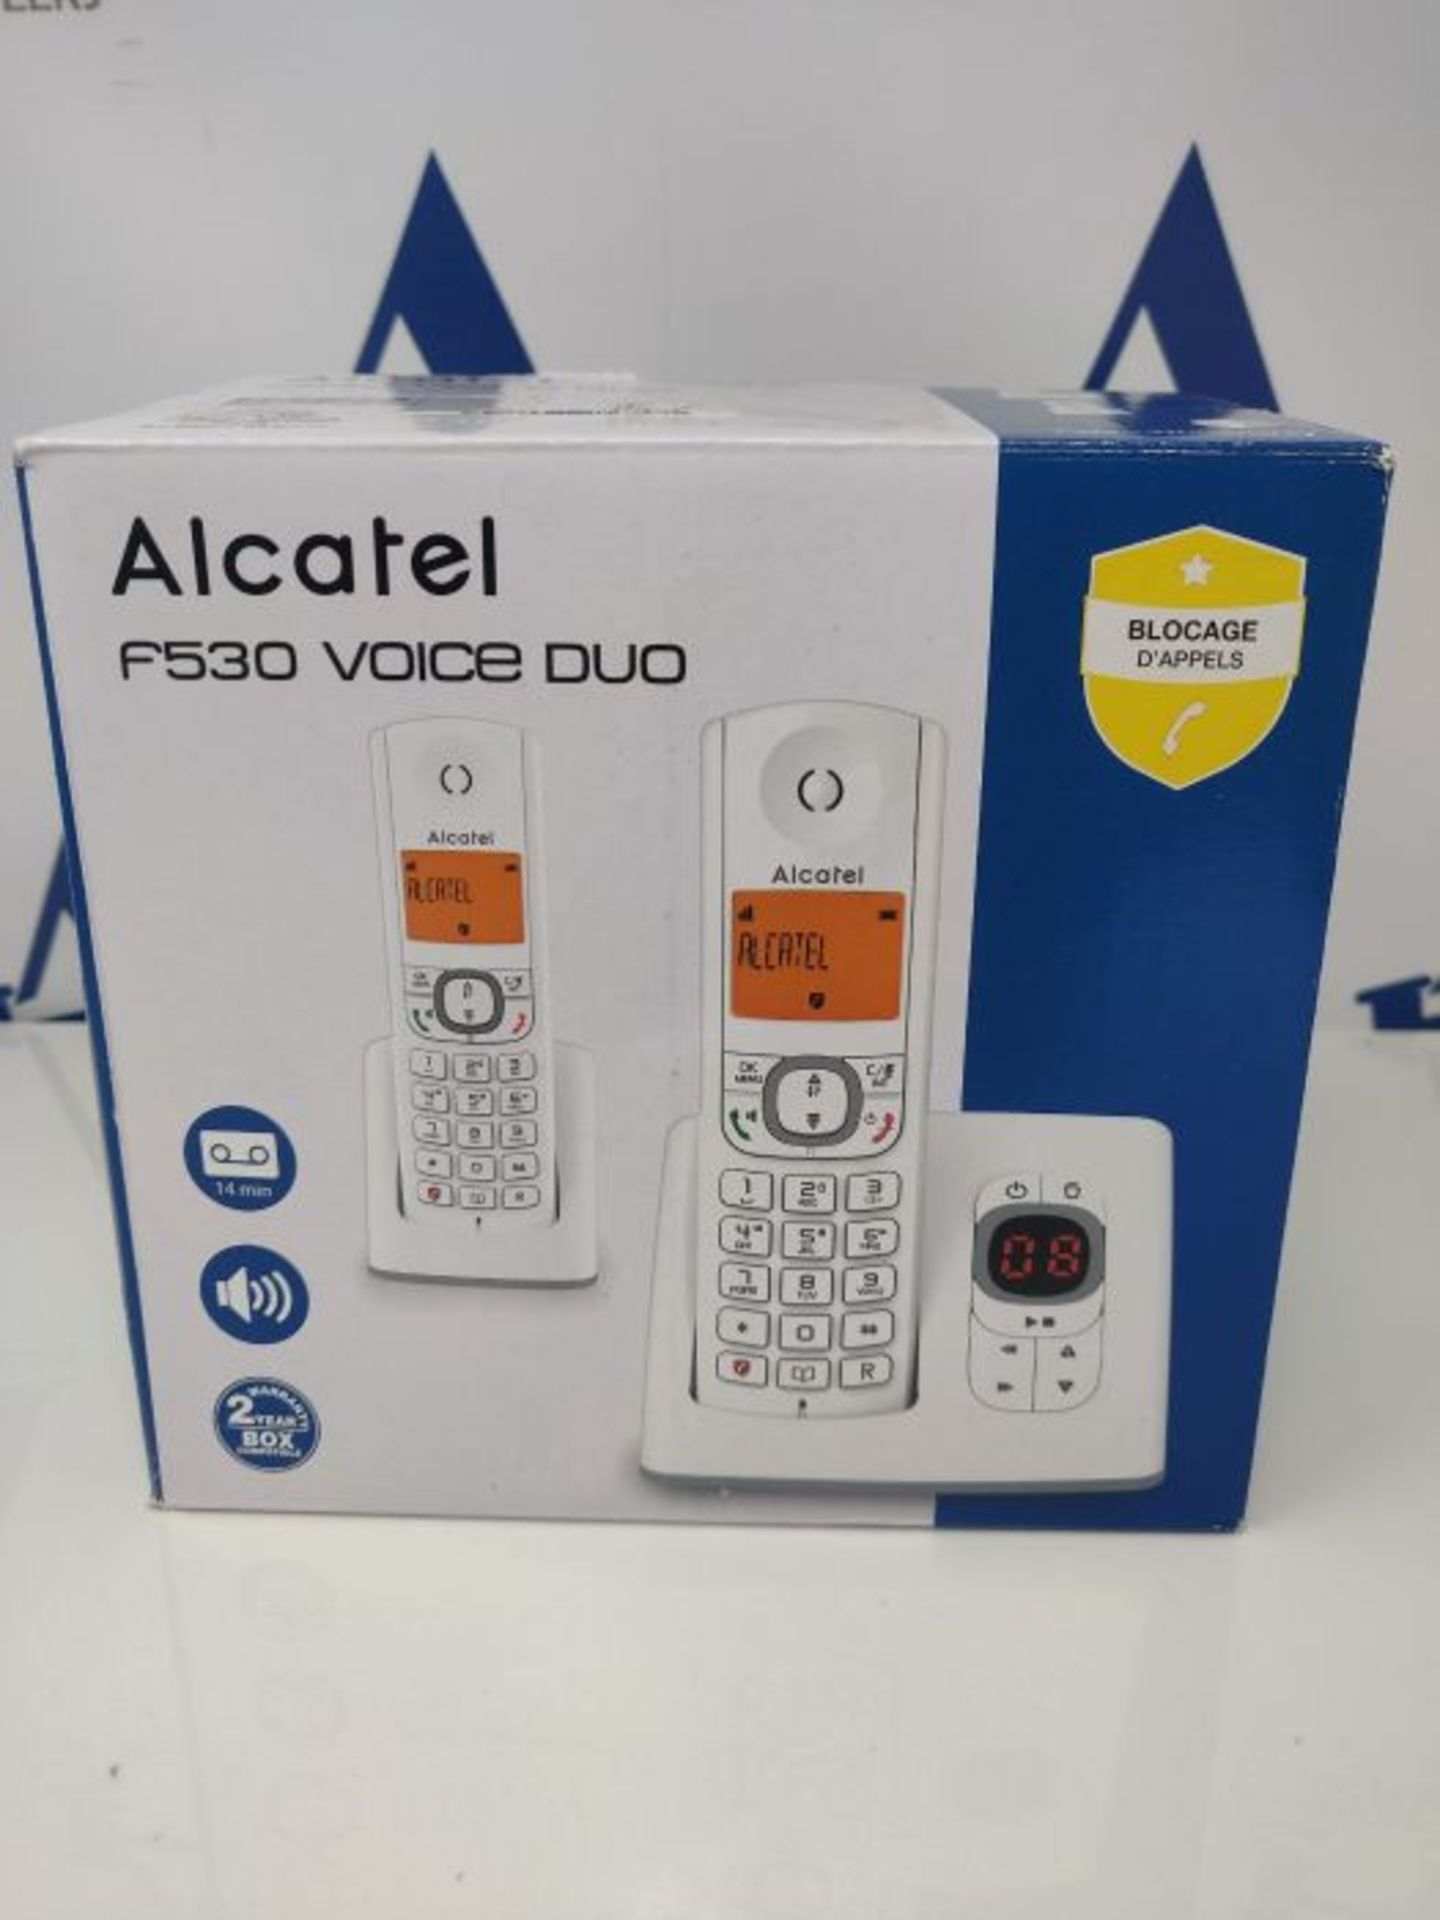 Alcatel F530 duo répondeur - Image 2 of 3